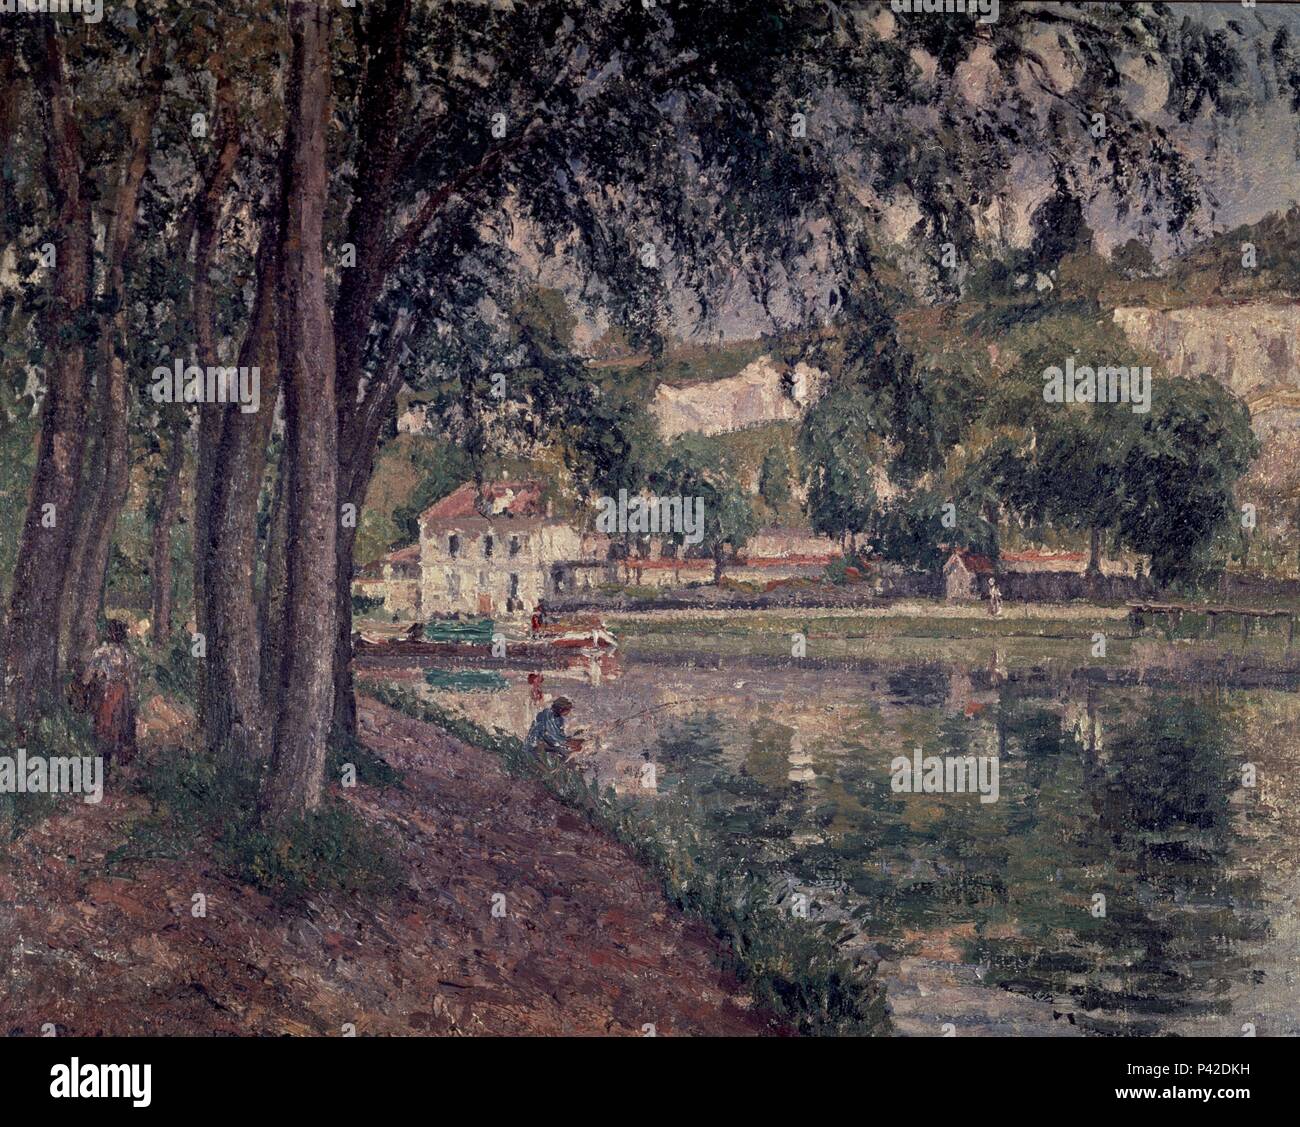 EL CANAL DE LOUIG - SIGLO XIX - IMPRESIONISMO FRANCES. Auteur : Camille Pissarro (1830-1903). Lieu : MUSÉE D'Orsay, France. Banque D'Images